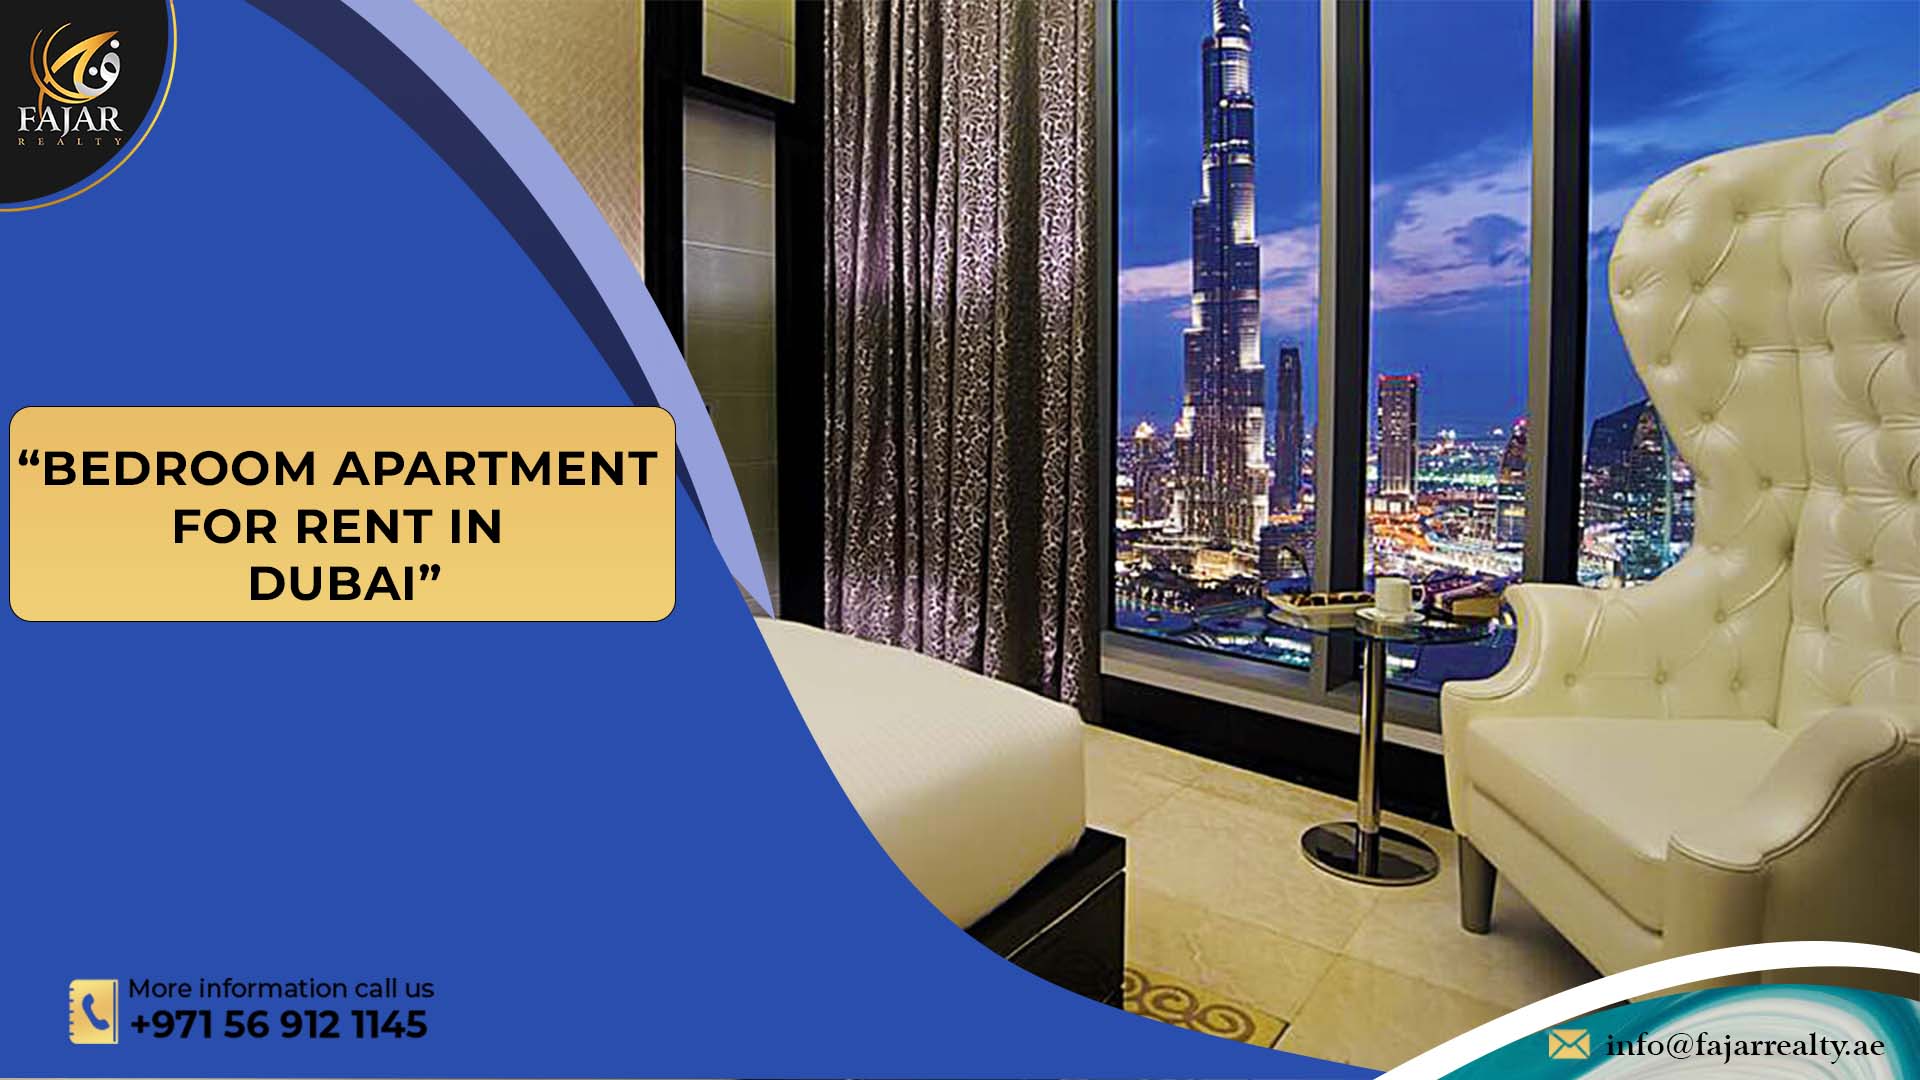 Bedroom Apartment For Rent In Dubai​ feature image